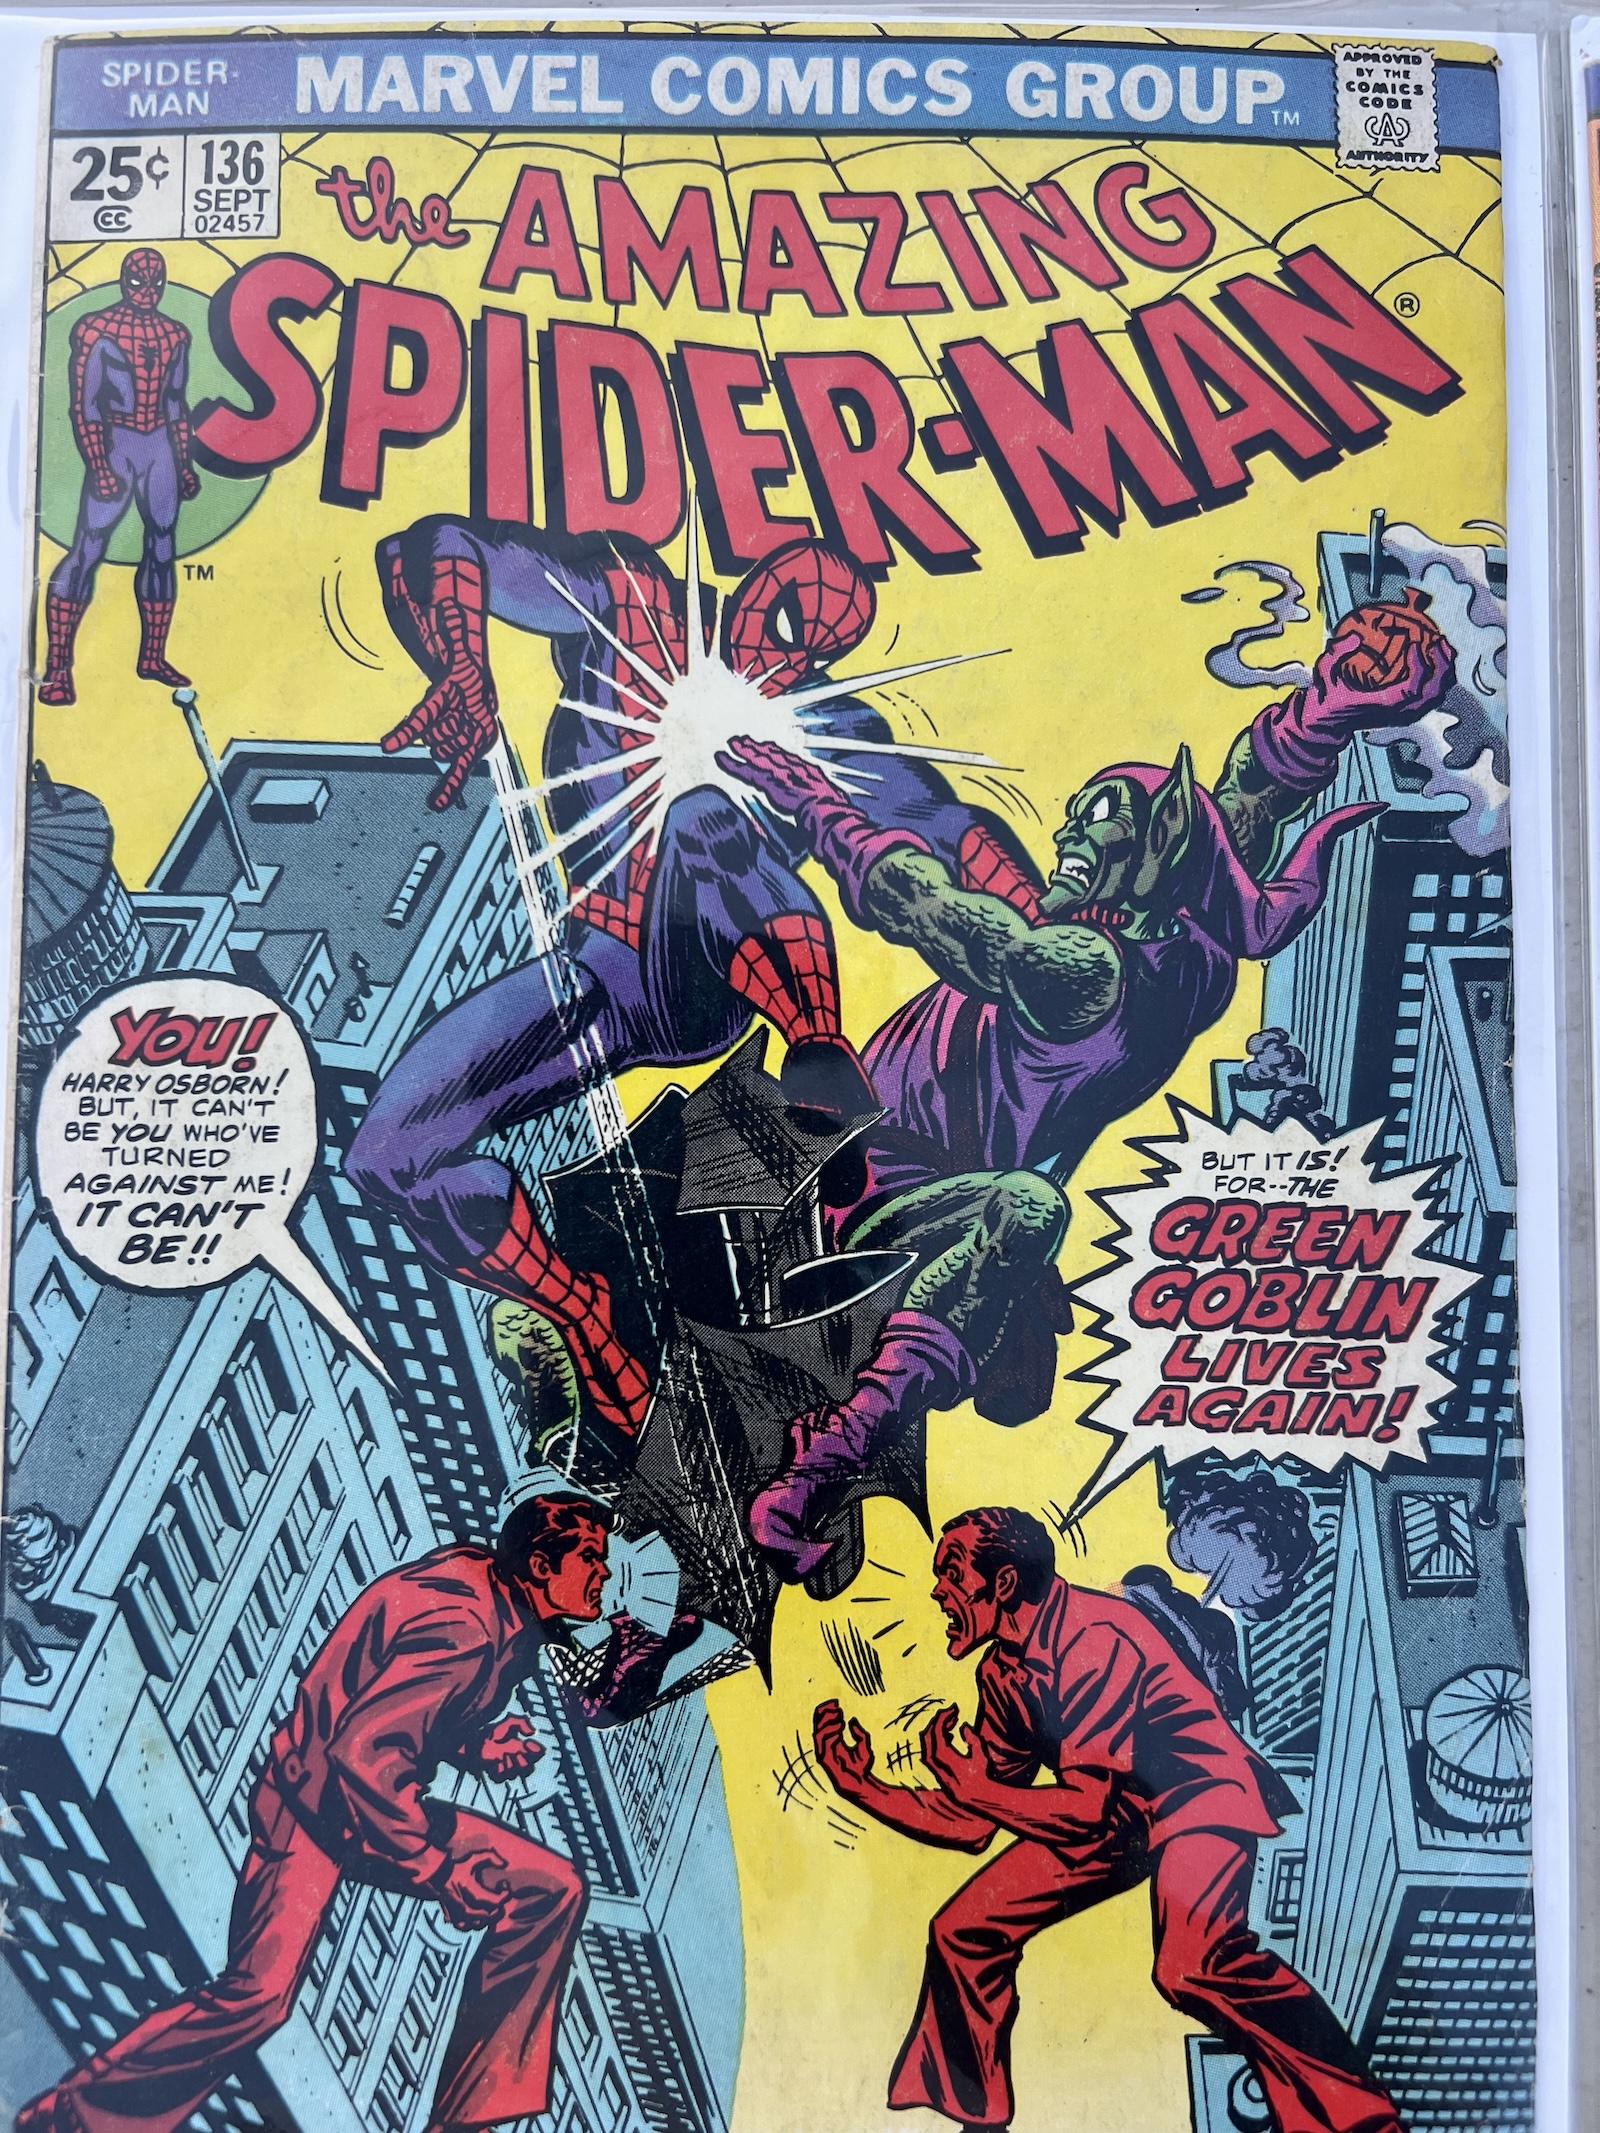 COMIC BOOK AMAZING SPIDER-MAN 84, 65, 136 MARVEL COMICS